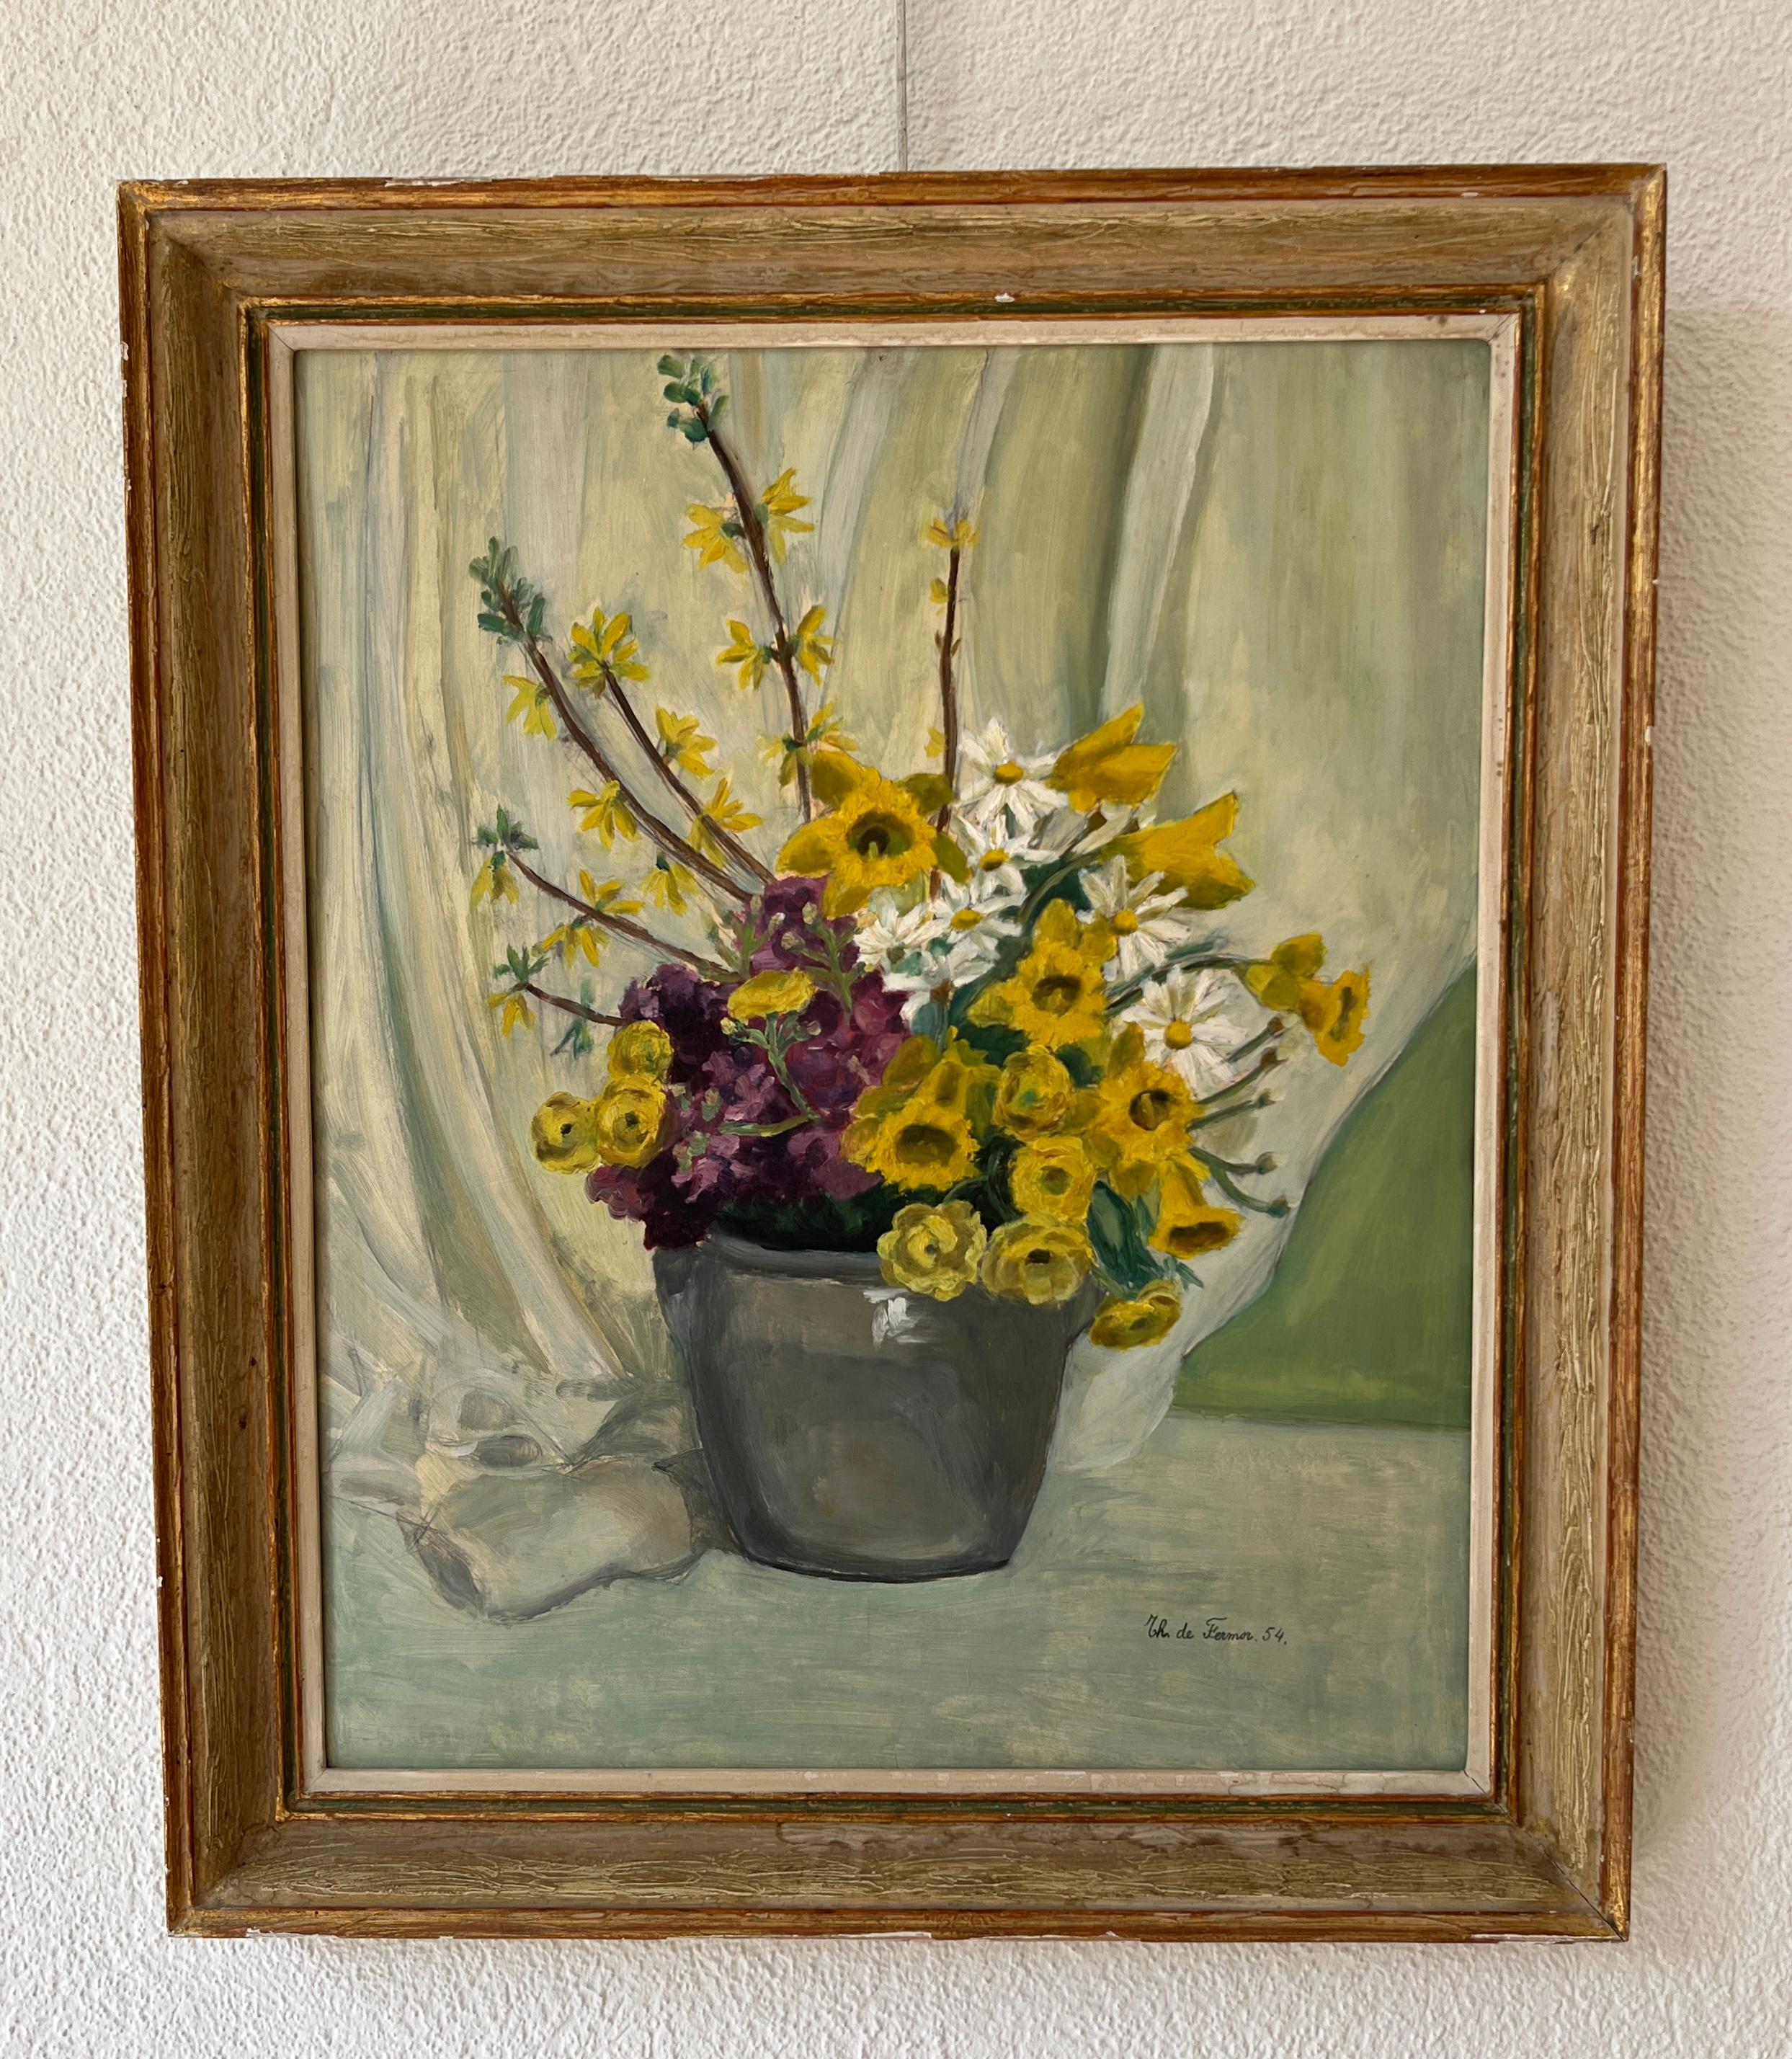 Flower pot - Painting by Th. De Fermor